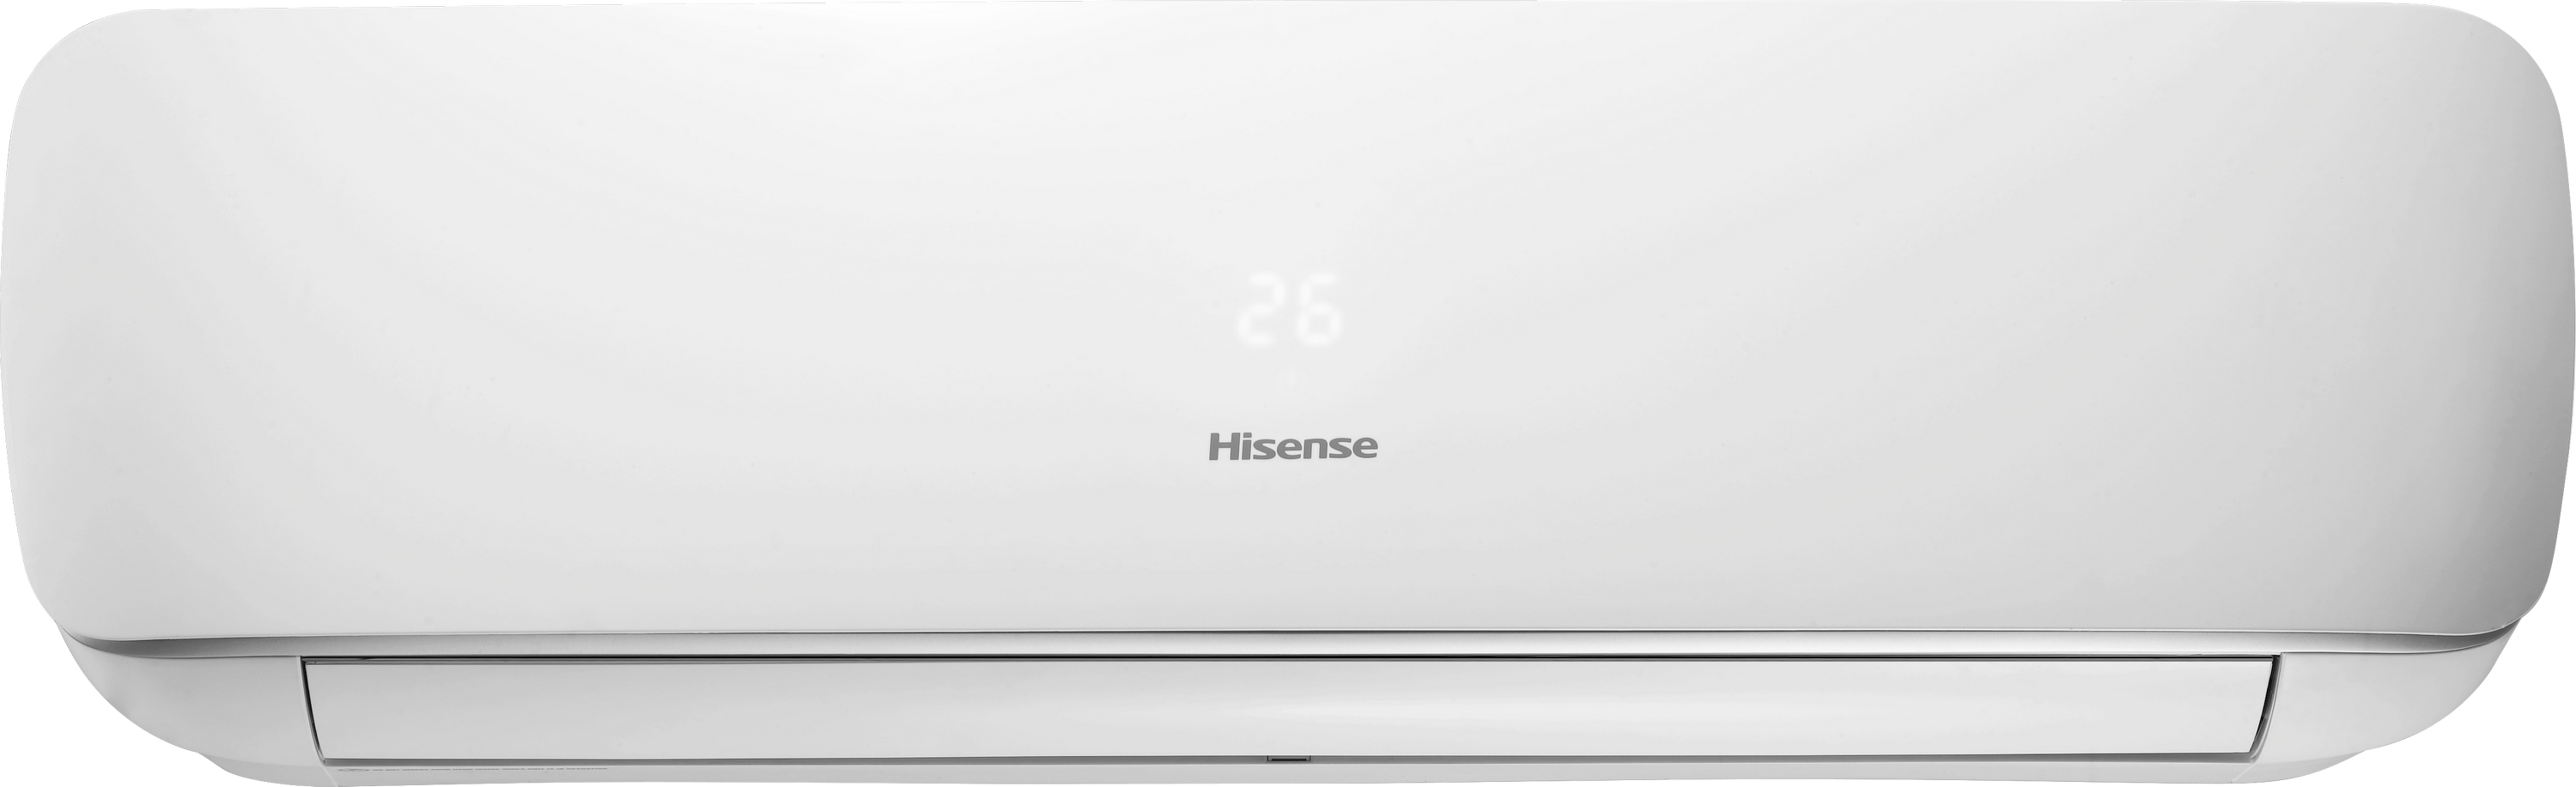 Кондиционер сплит-система Hisense Apple Pie AST-09UW4SVETG10 цена 0.00 грн - фотография 2